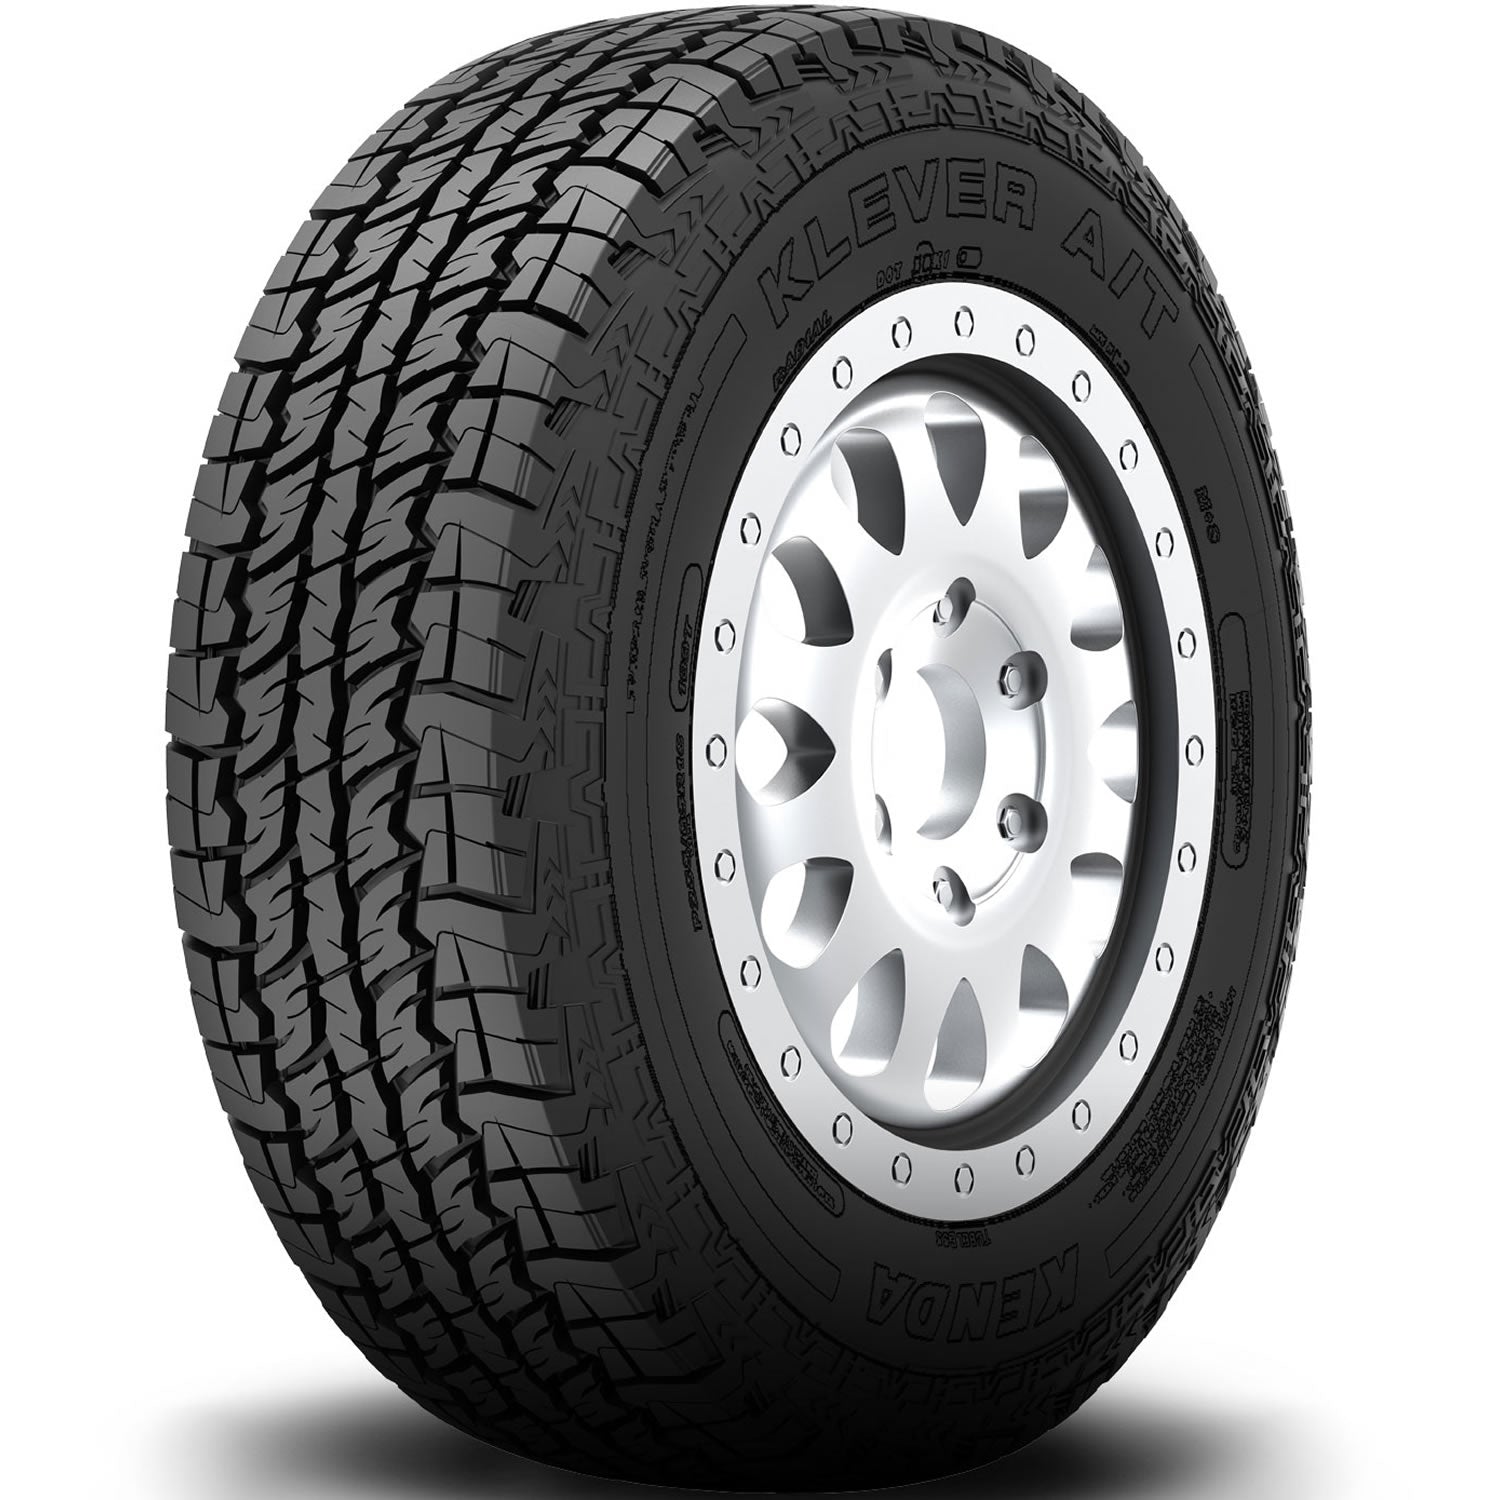 KENDA KLEVER AT P235/70R16 (29X9.4R 16) Tires